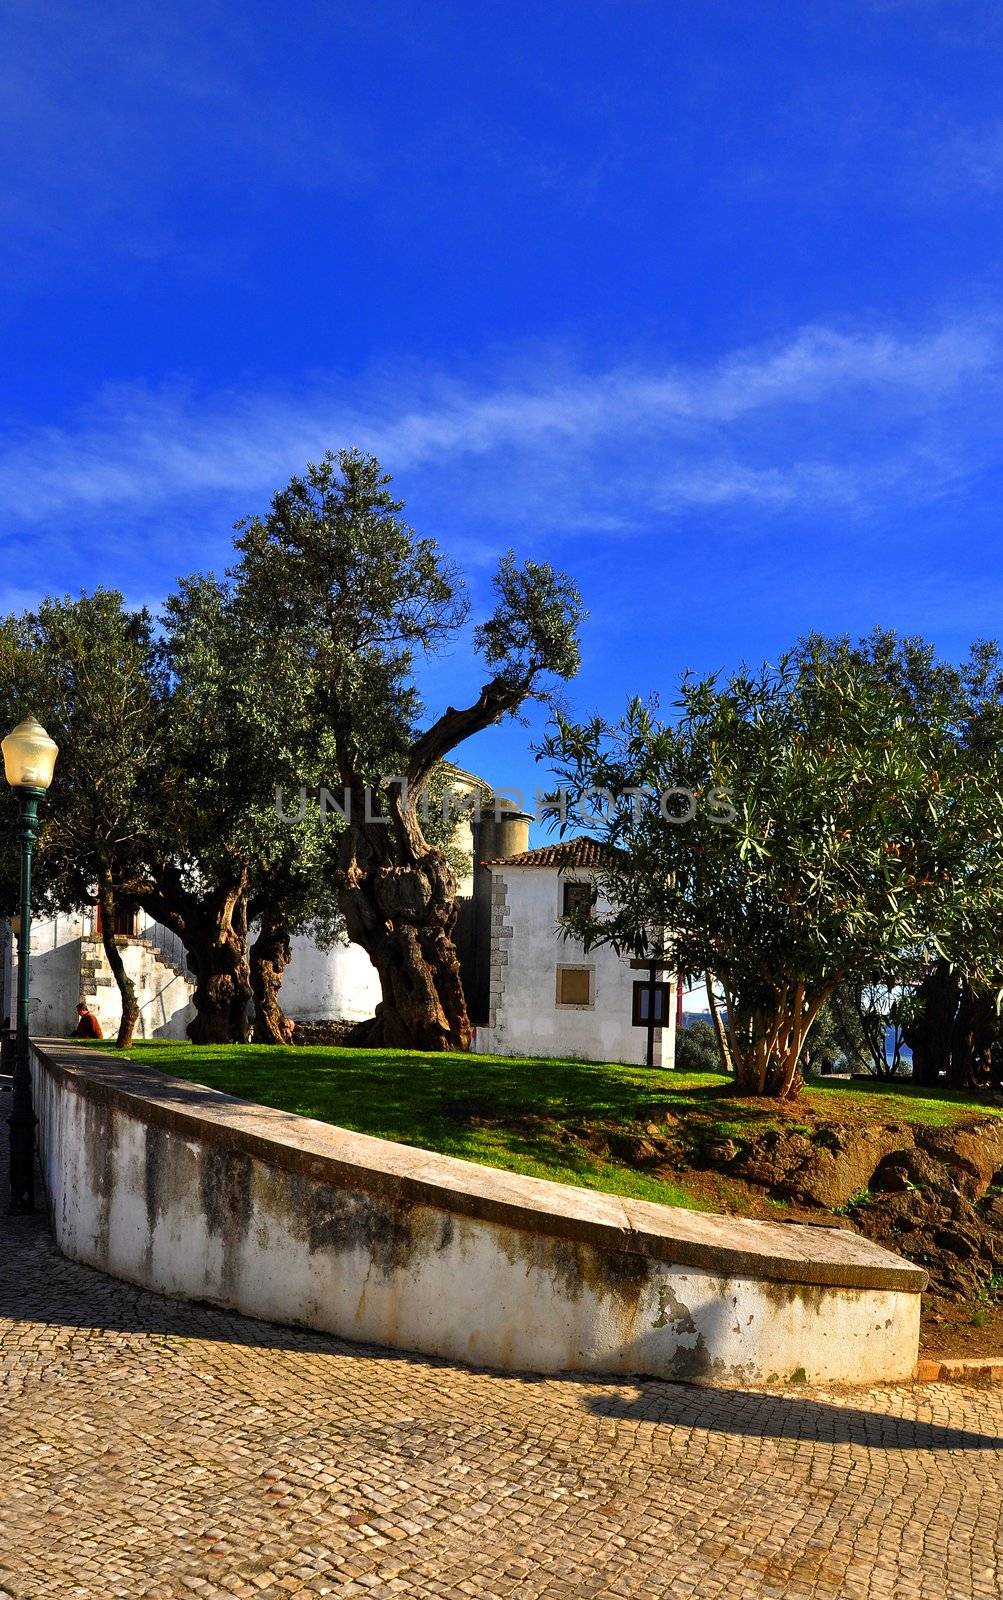 Landscape near the Chapel, old trees. Portugal Lisbon